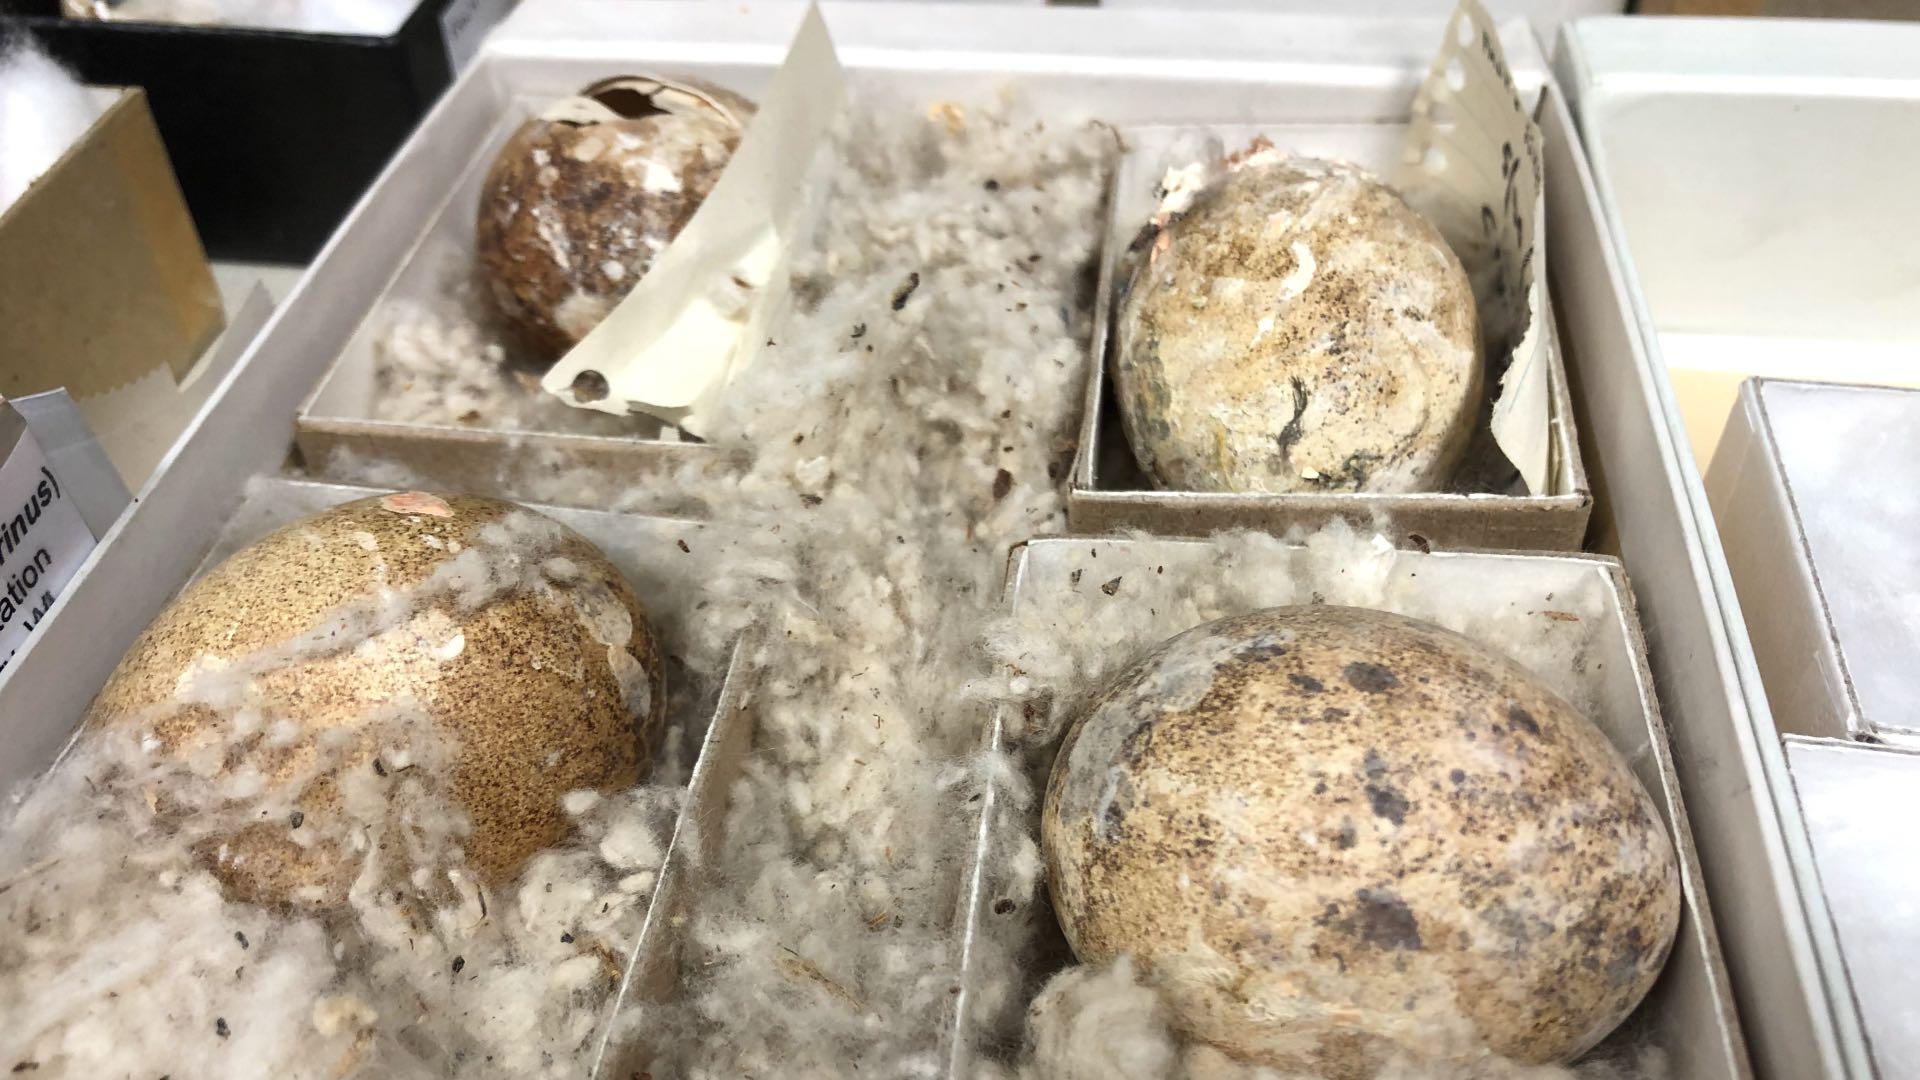 Pergerine falcon eggs. (Patty Wetli / WTTW News)